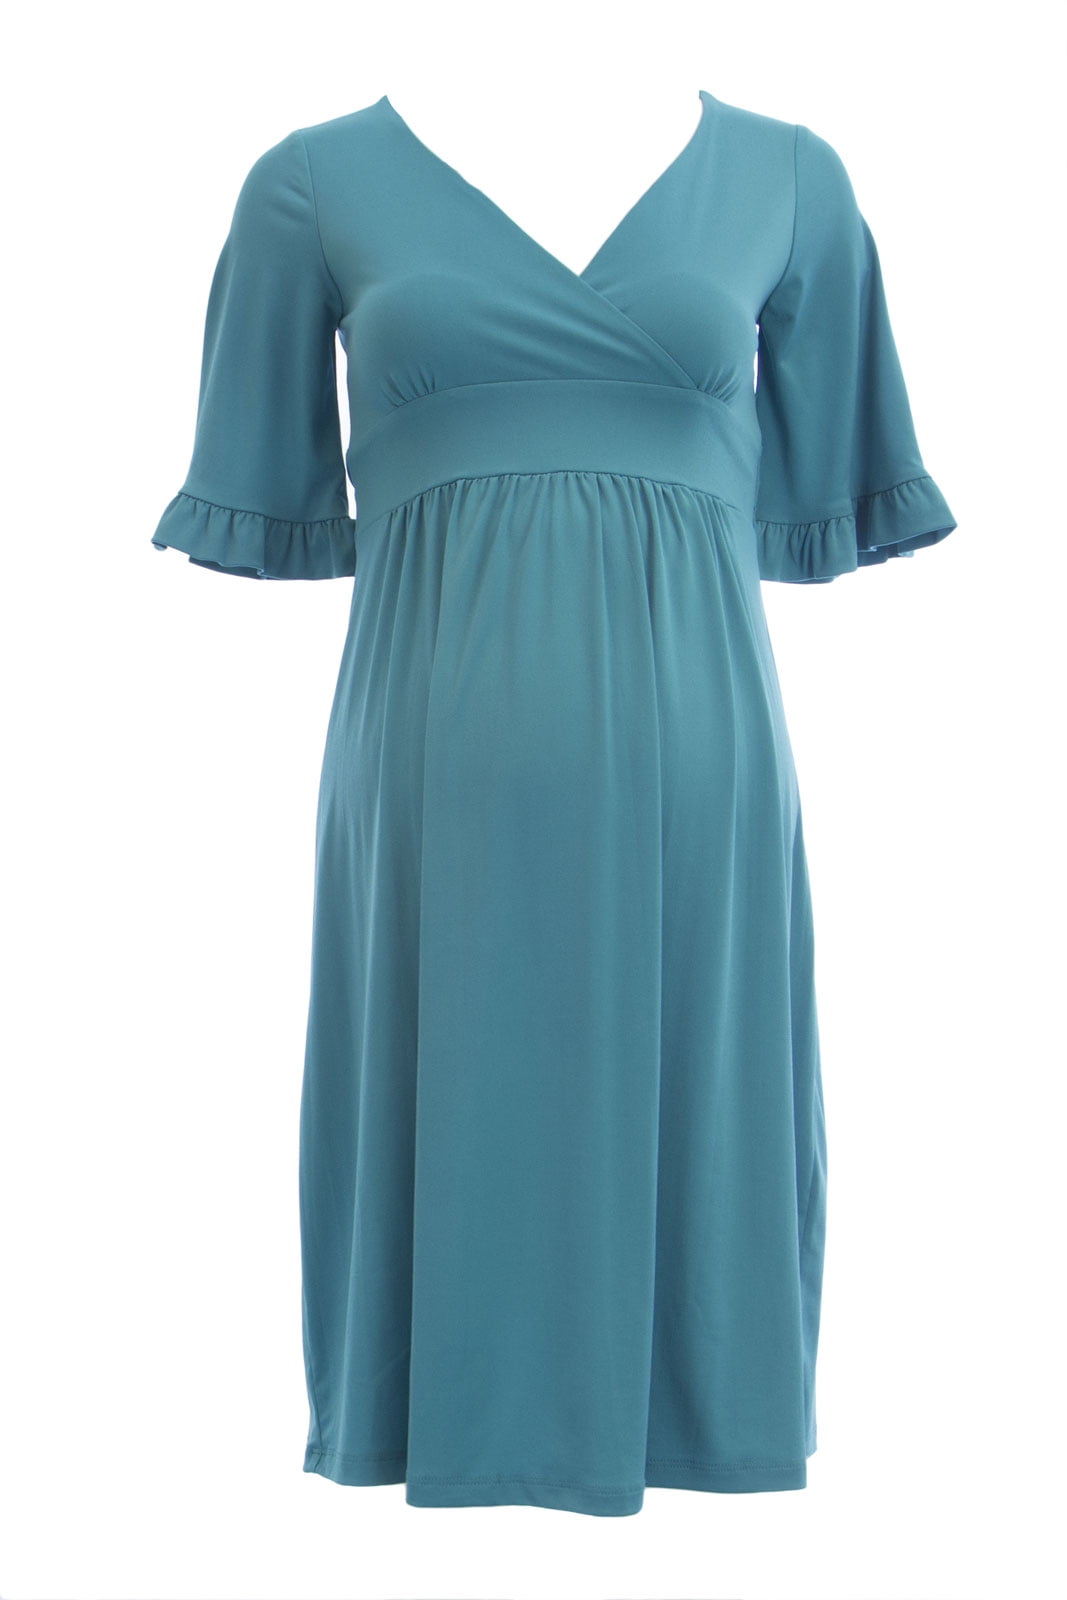 OLIAN Maternity Women's Ruffle Sleeve Surplice Neck Dress - Walmart.com